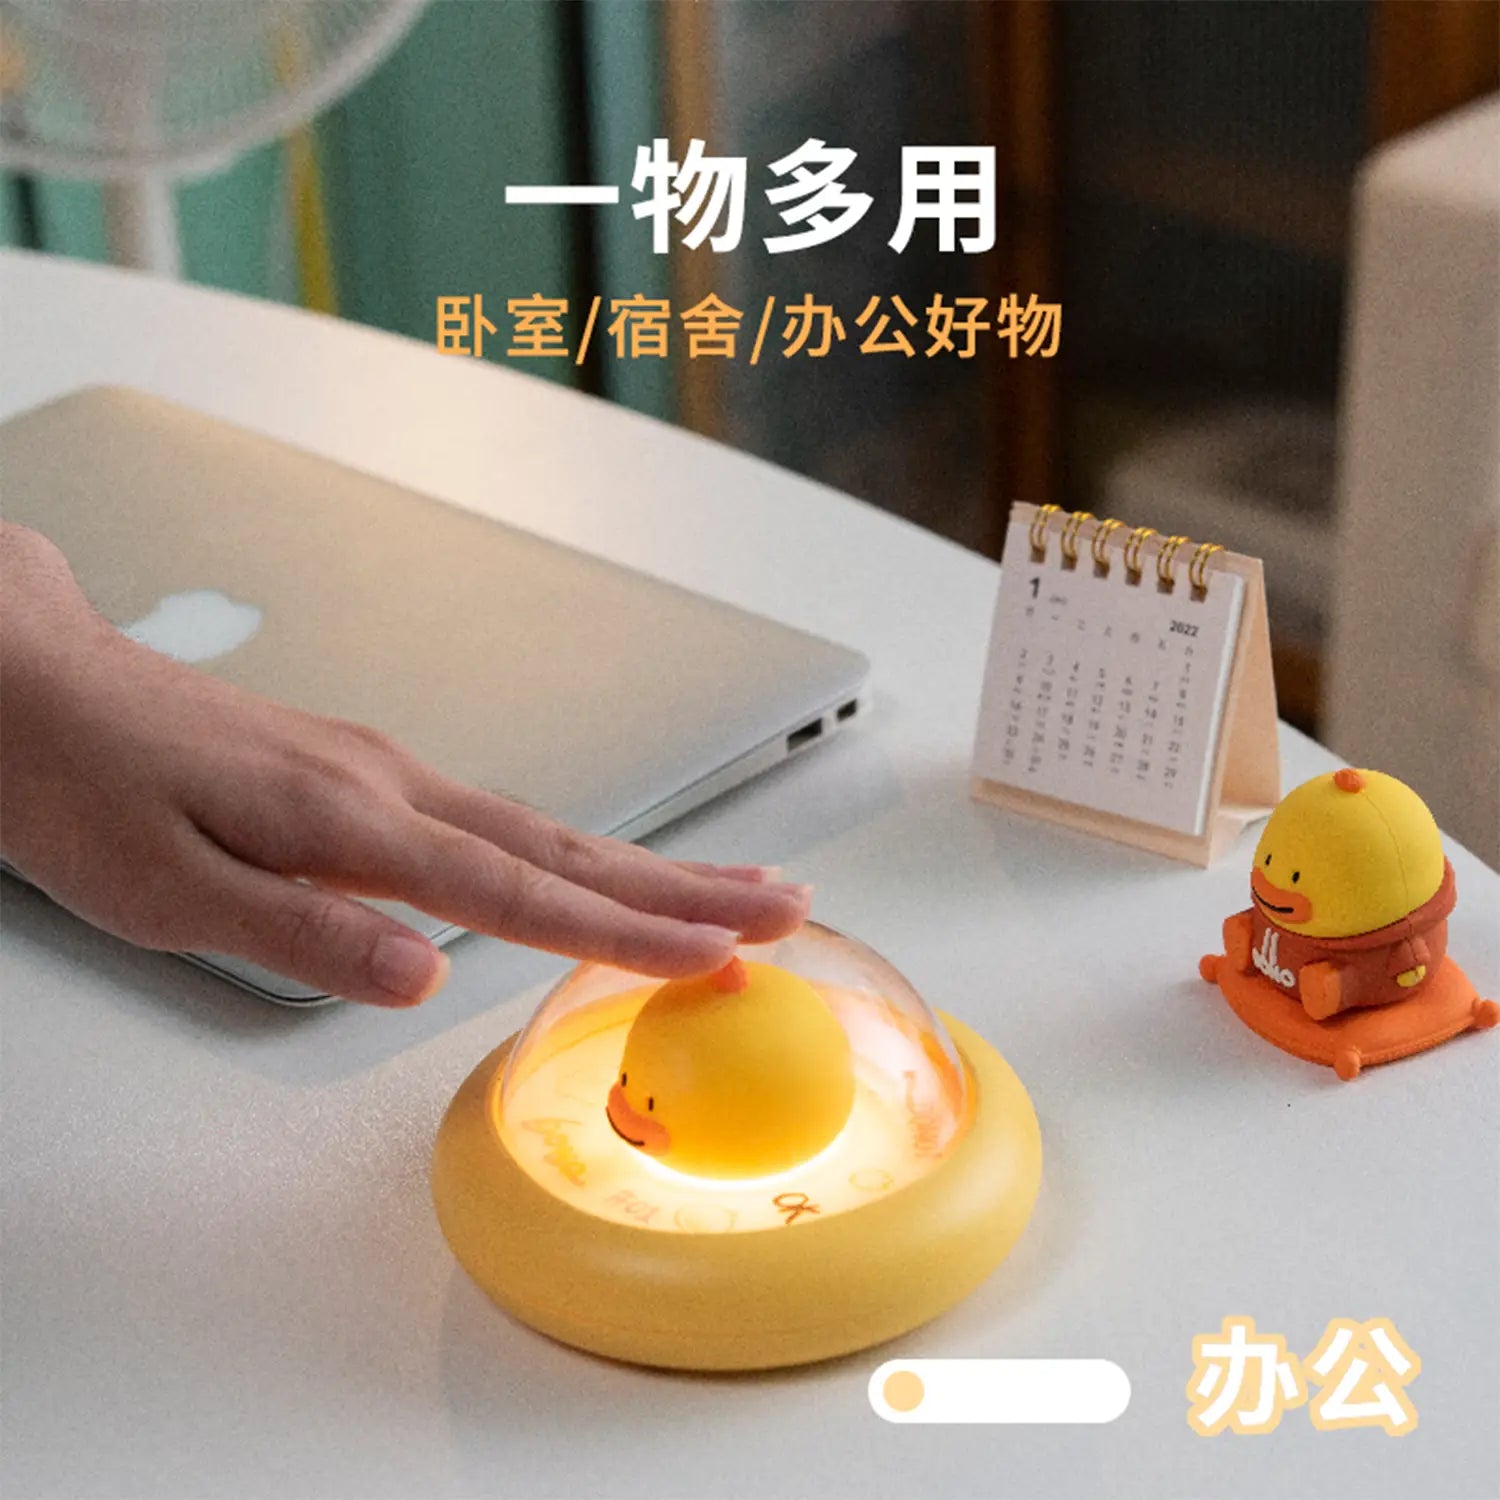 iCarer Family® Cute UFO Clap Lamp Night Light Creative Luminous Decoration Touch USB Rechargable, Yellow